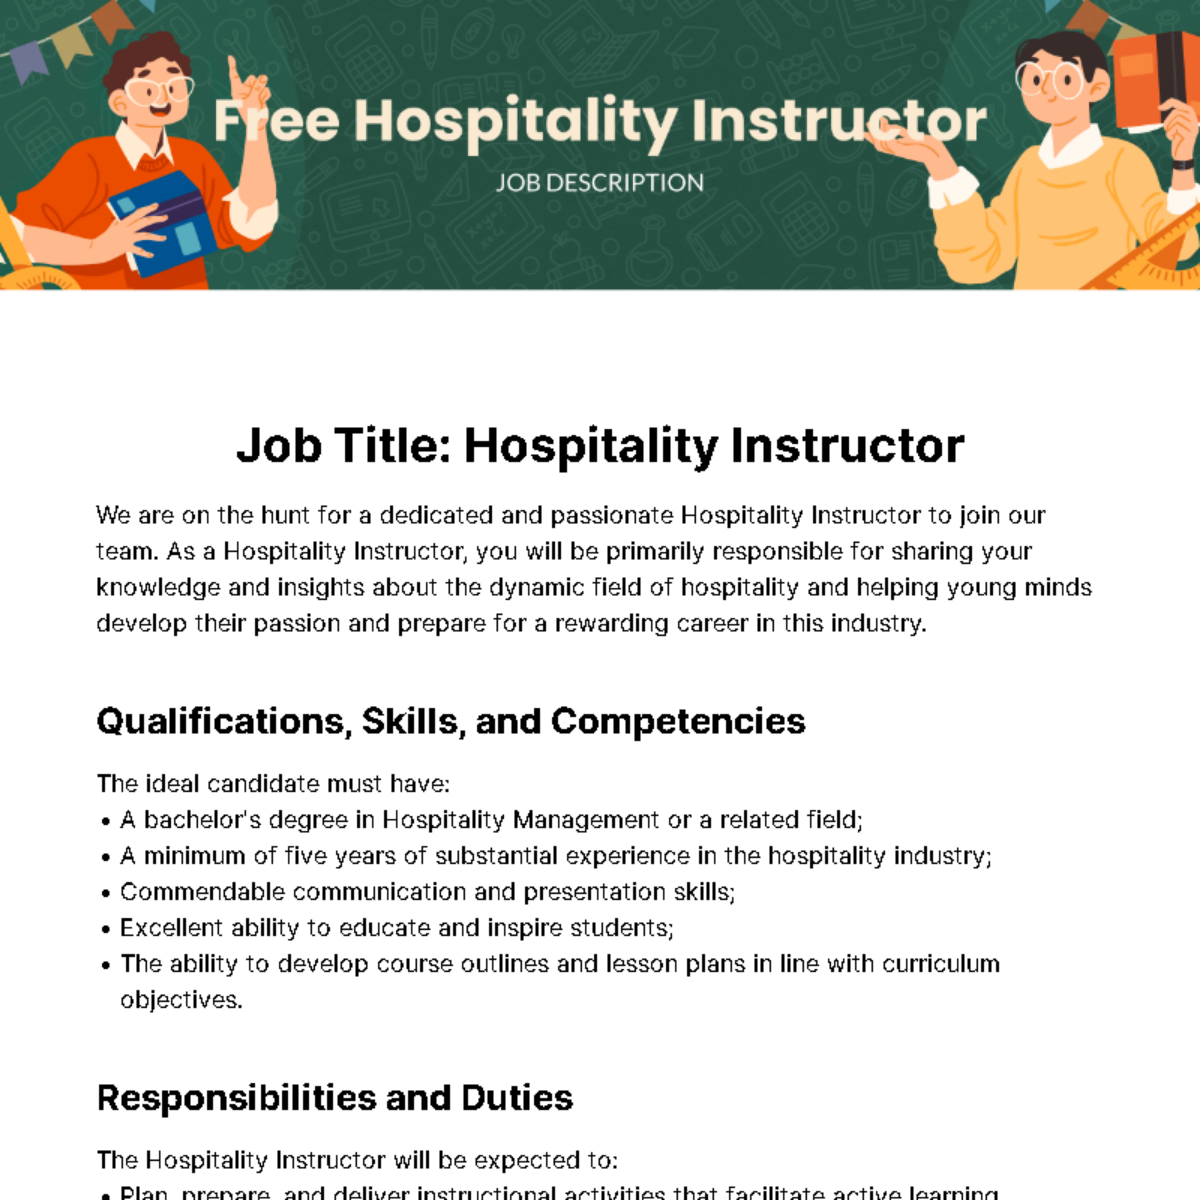 Free Hospitality Instructor Job Description Template